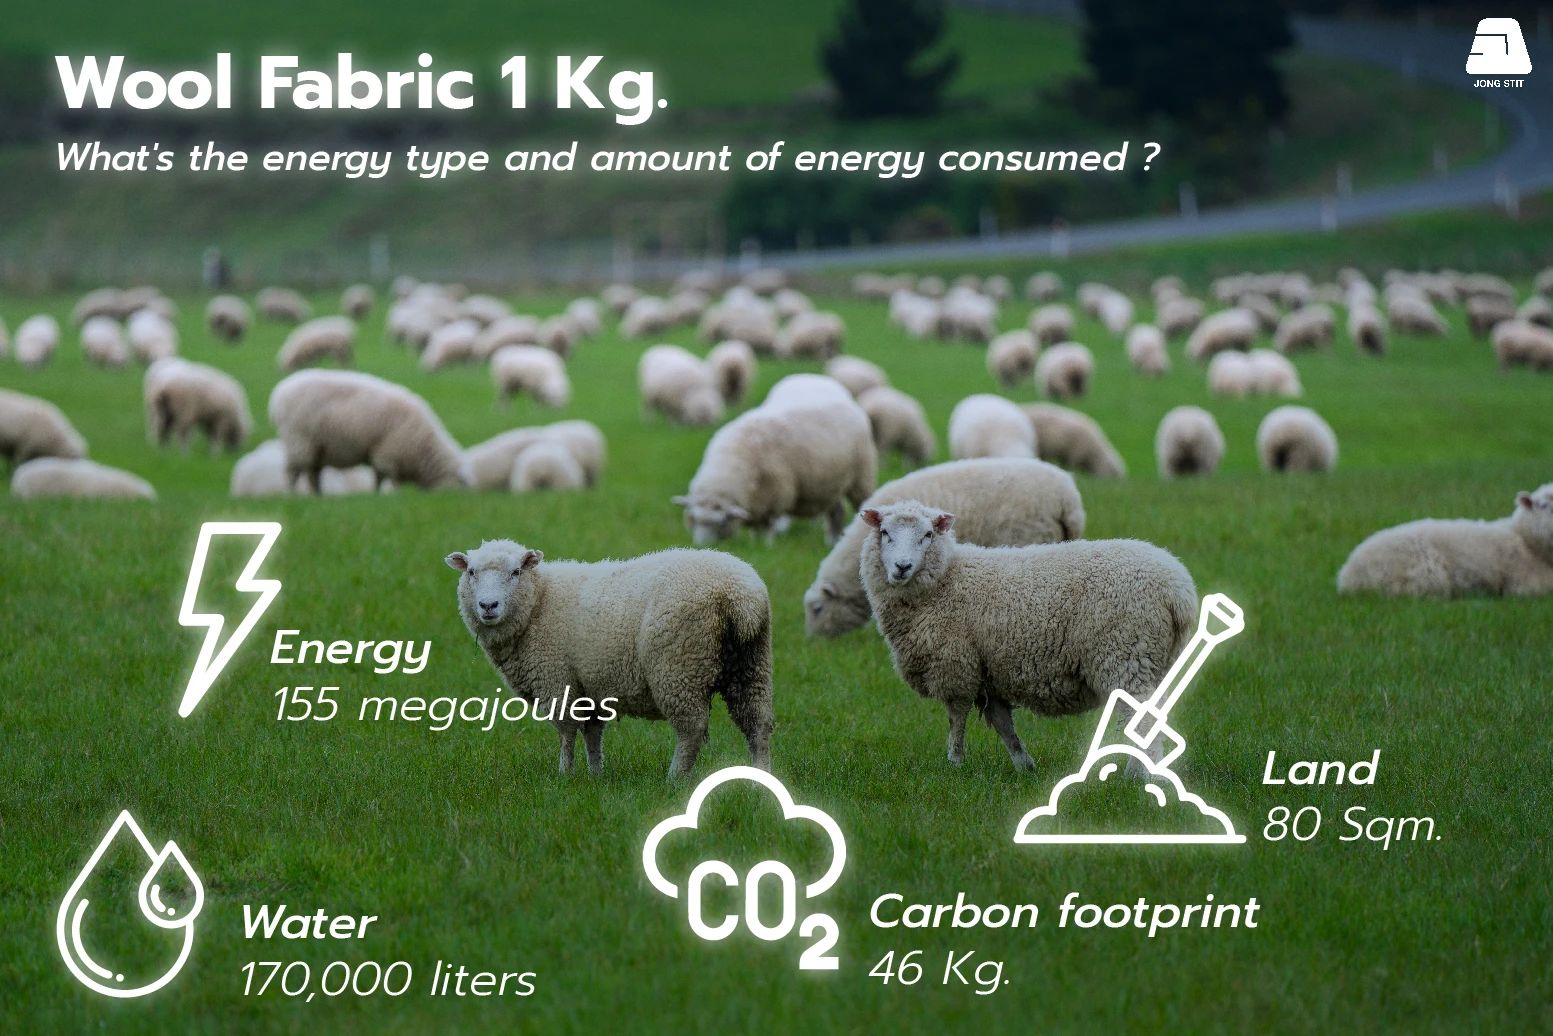 Kilogram of Wool resources consumption